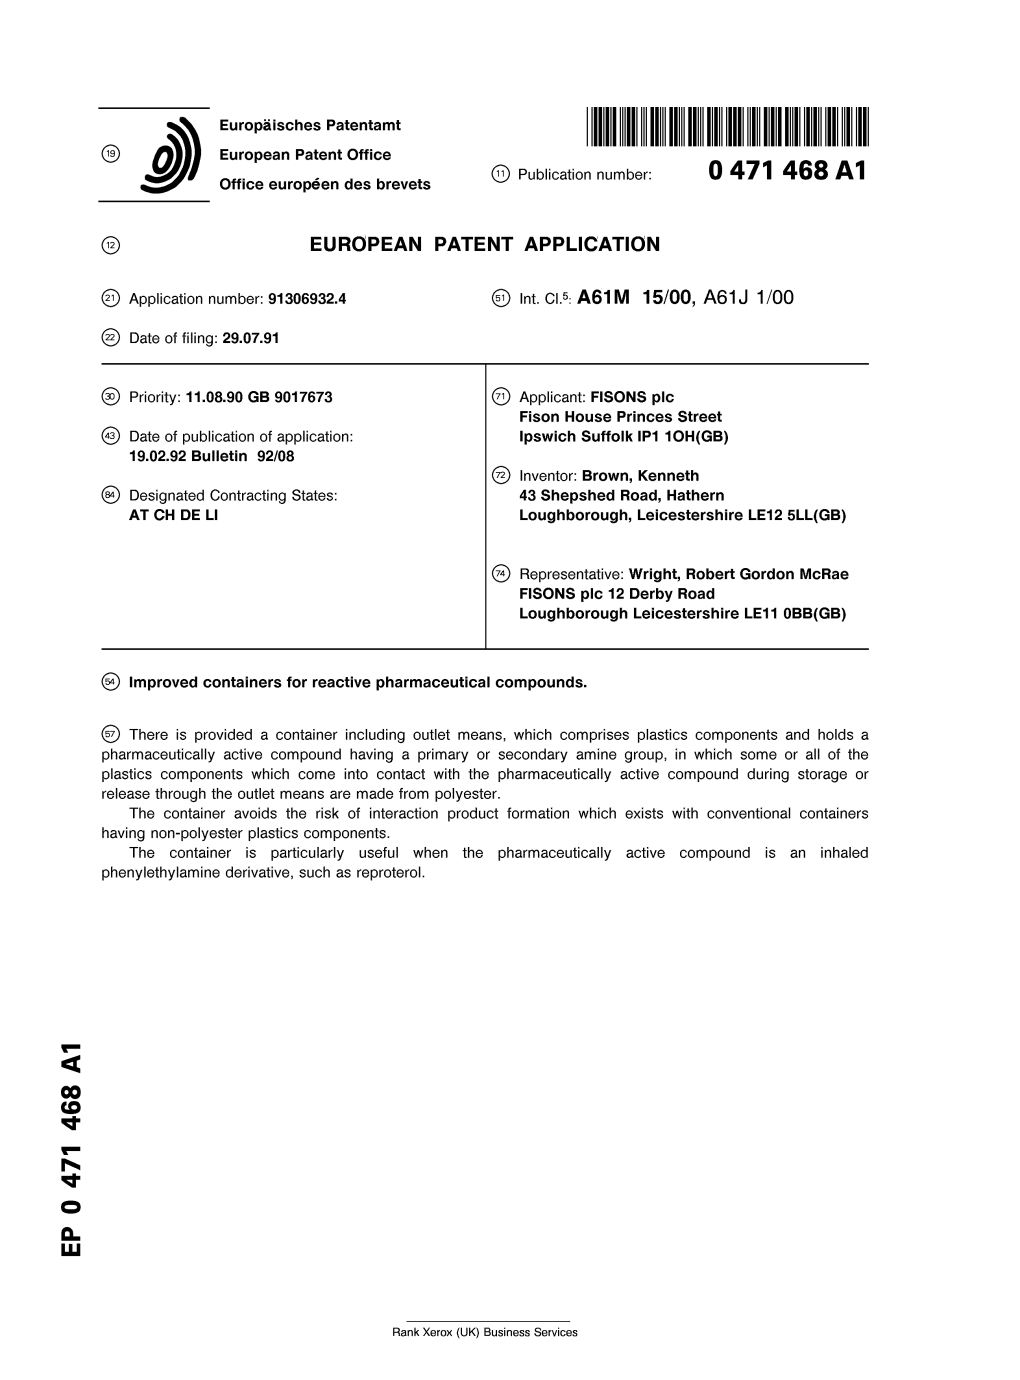 European Patent Office © Publication Number: 0 471 468 A1 Office Europeen Des Brevets